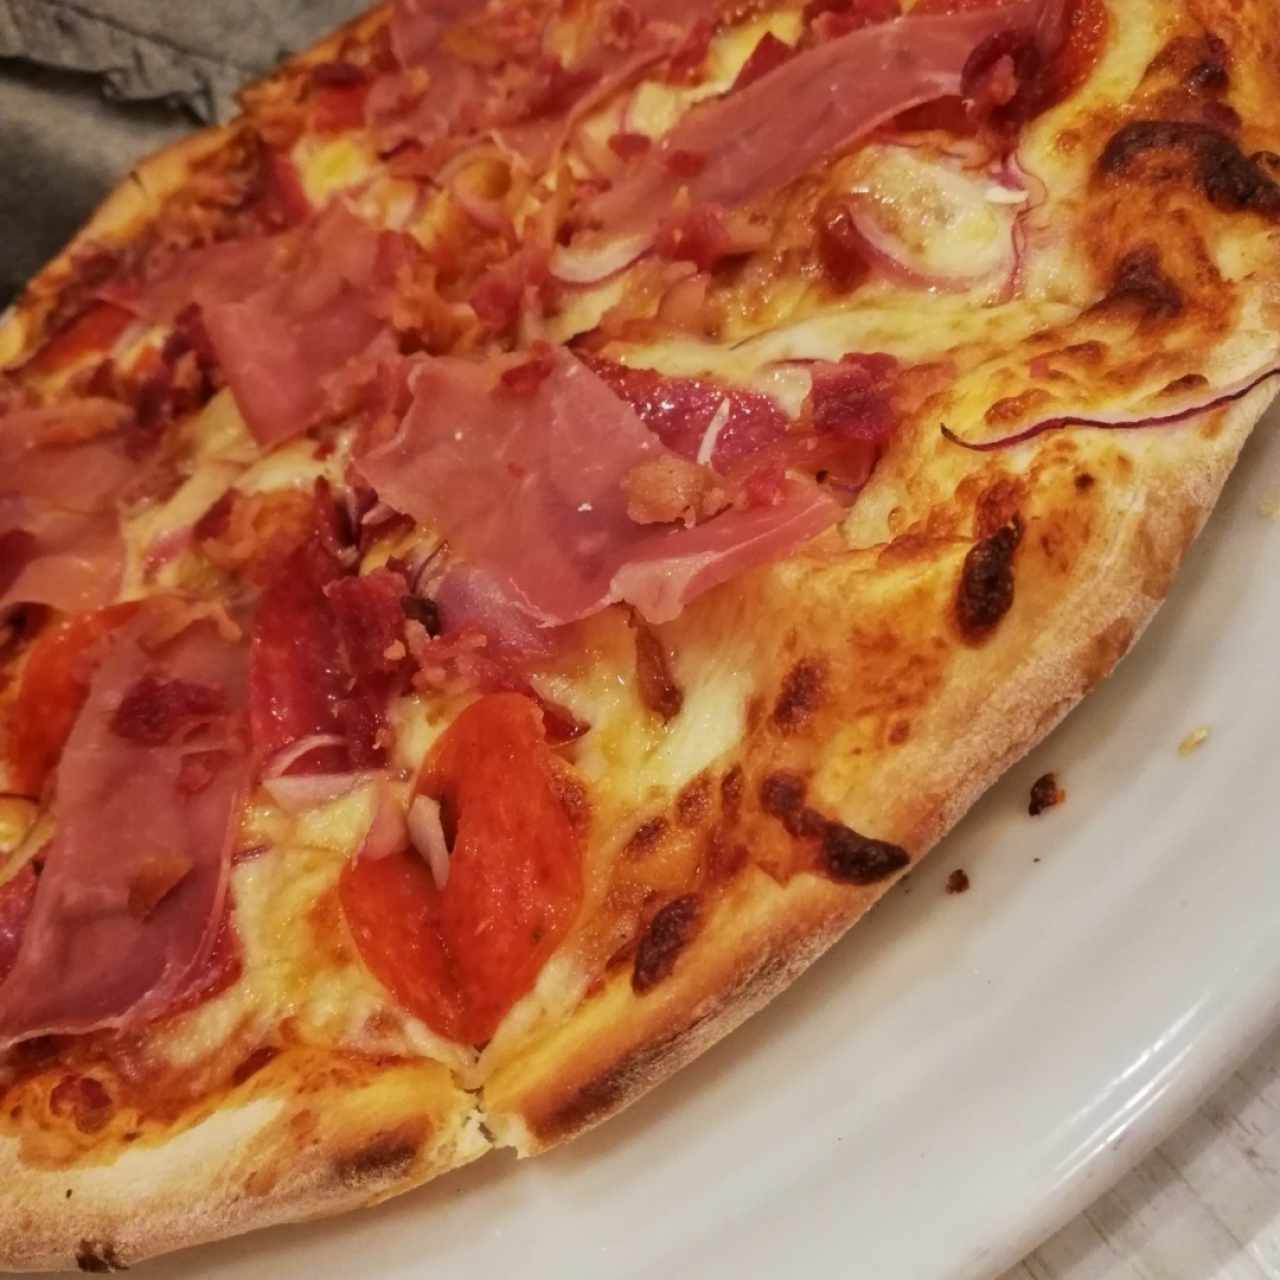 Pizza cuatro carnes 